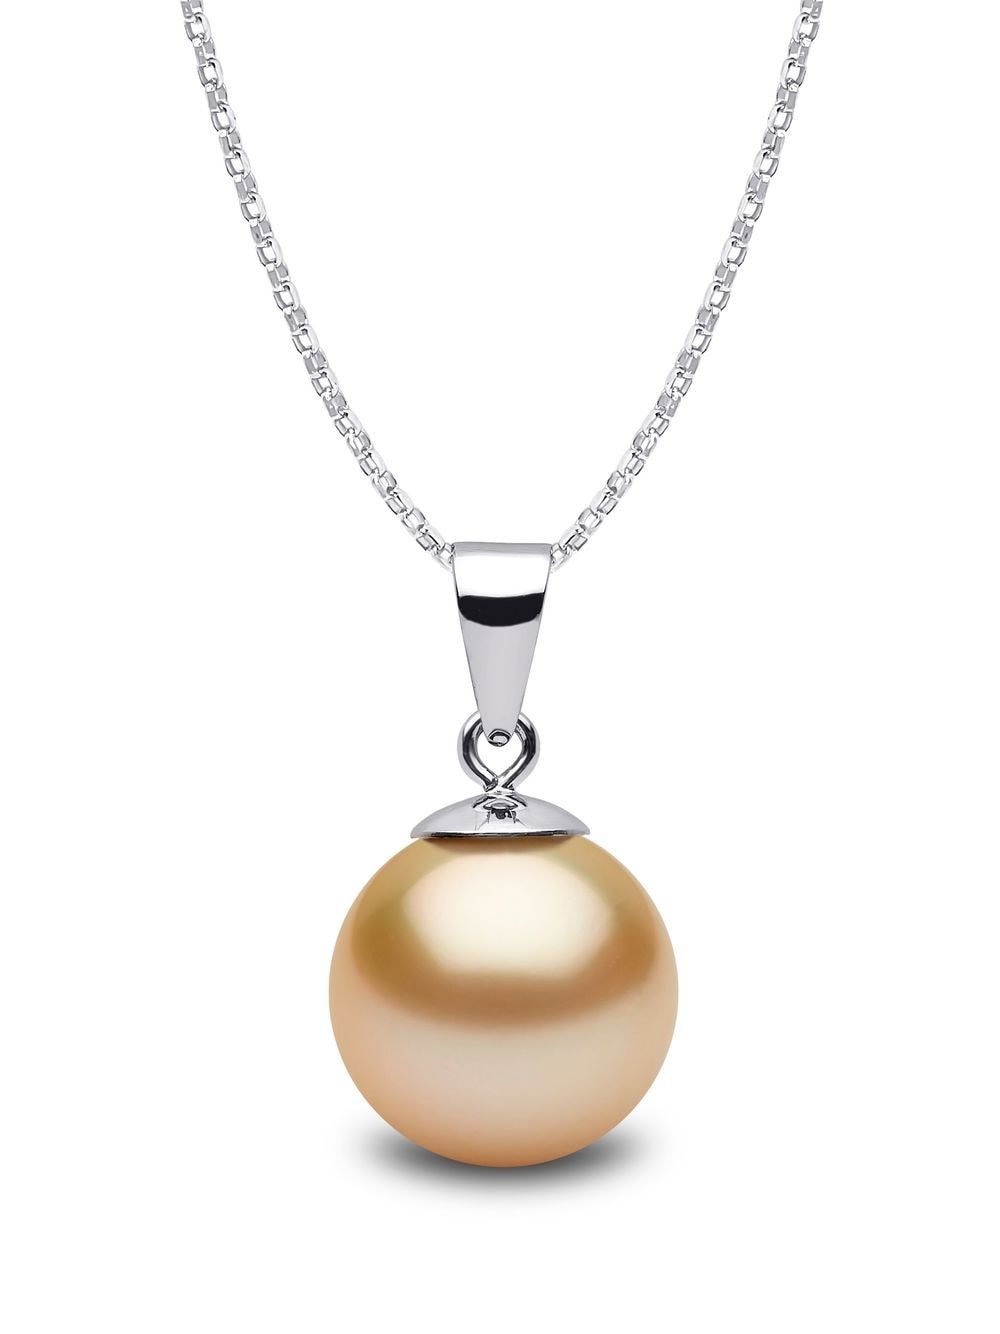 Yoko London 18kt white gold Classic 9mm Golden South Sea pearl pendant necklace - Silver von Yoko London